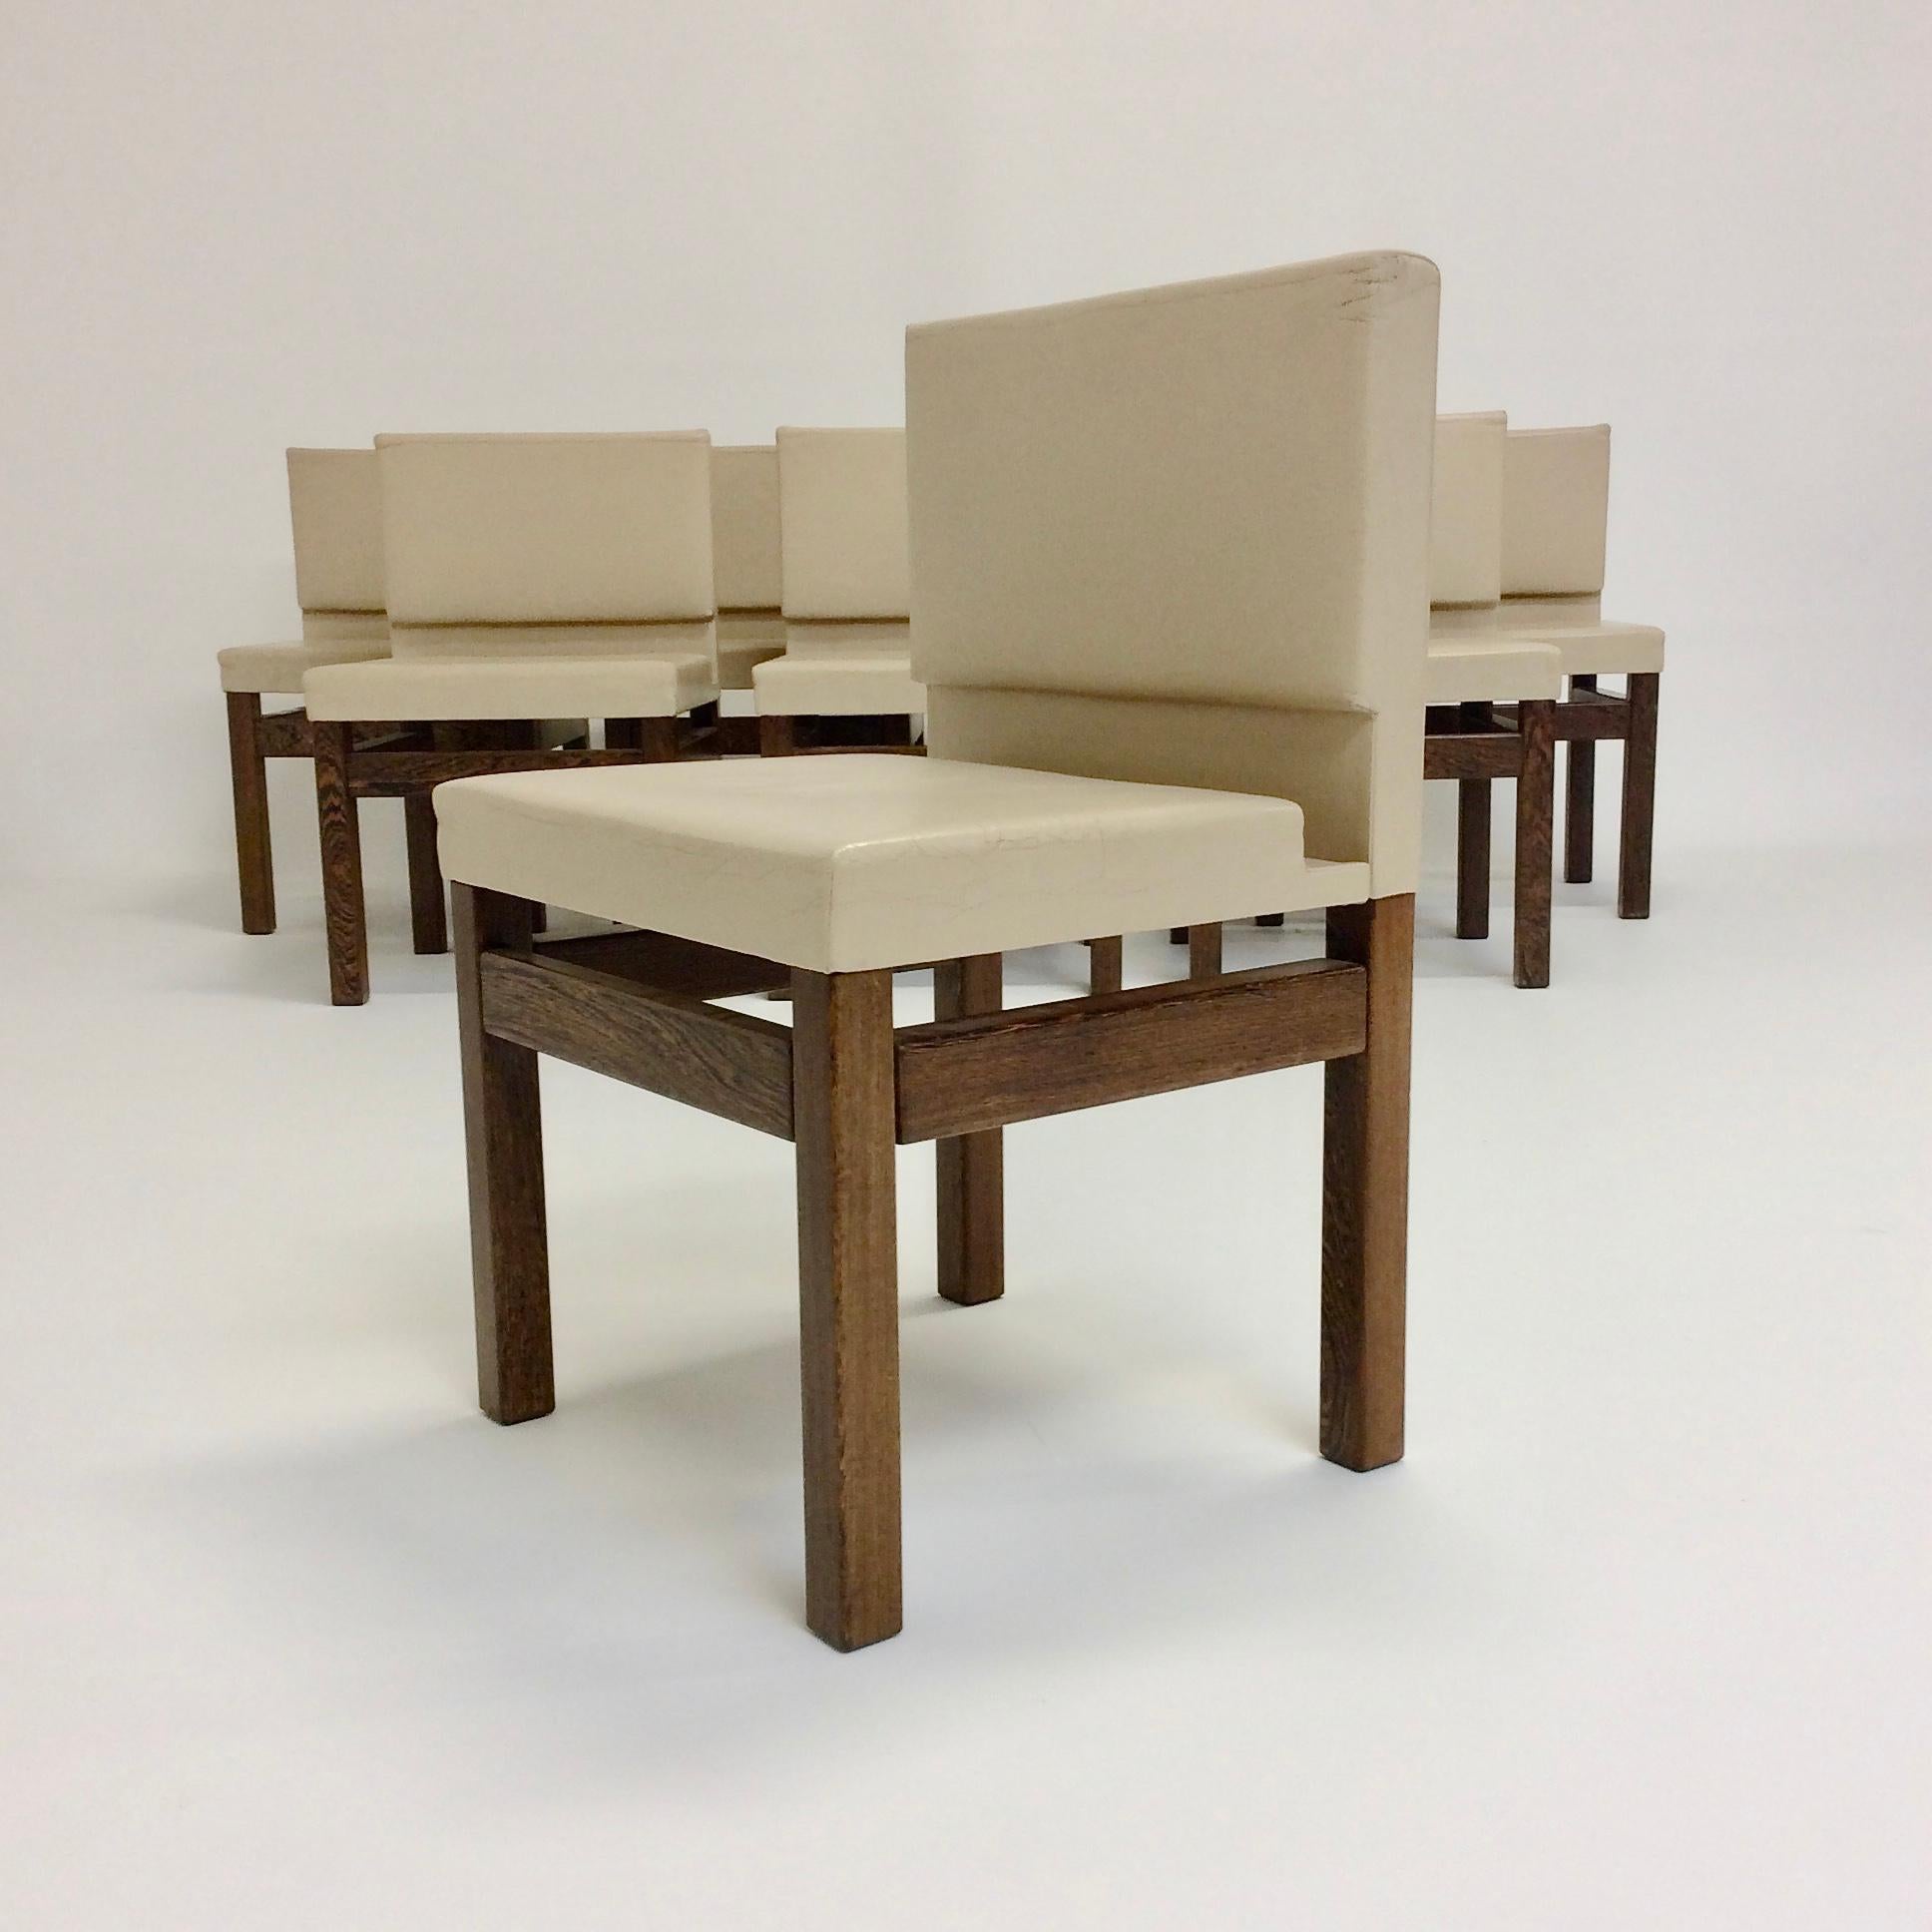 Set of 8 dining chairs design attributed to Veranneman, circa 1960, Belgium.
Wengé and mastic leather.
Dimensions: 78 cm H, 49 cm W, 46 cm D, seat height: 46 cm.
Original condition.